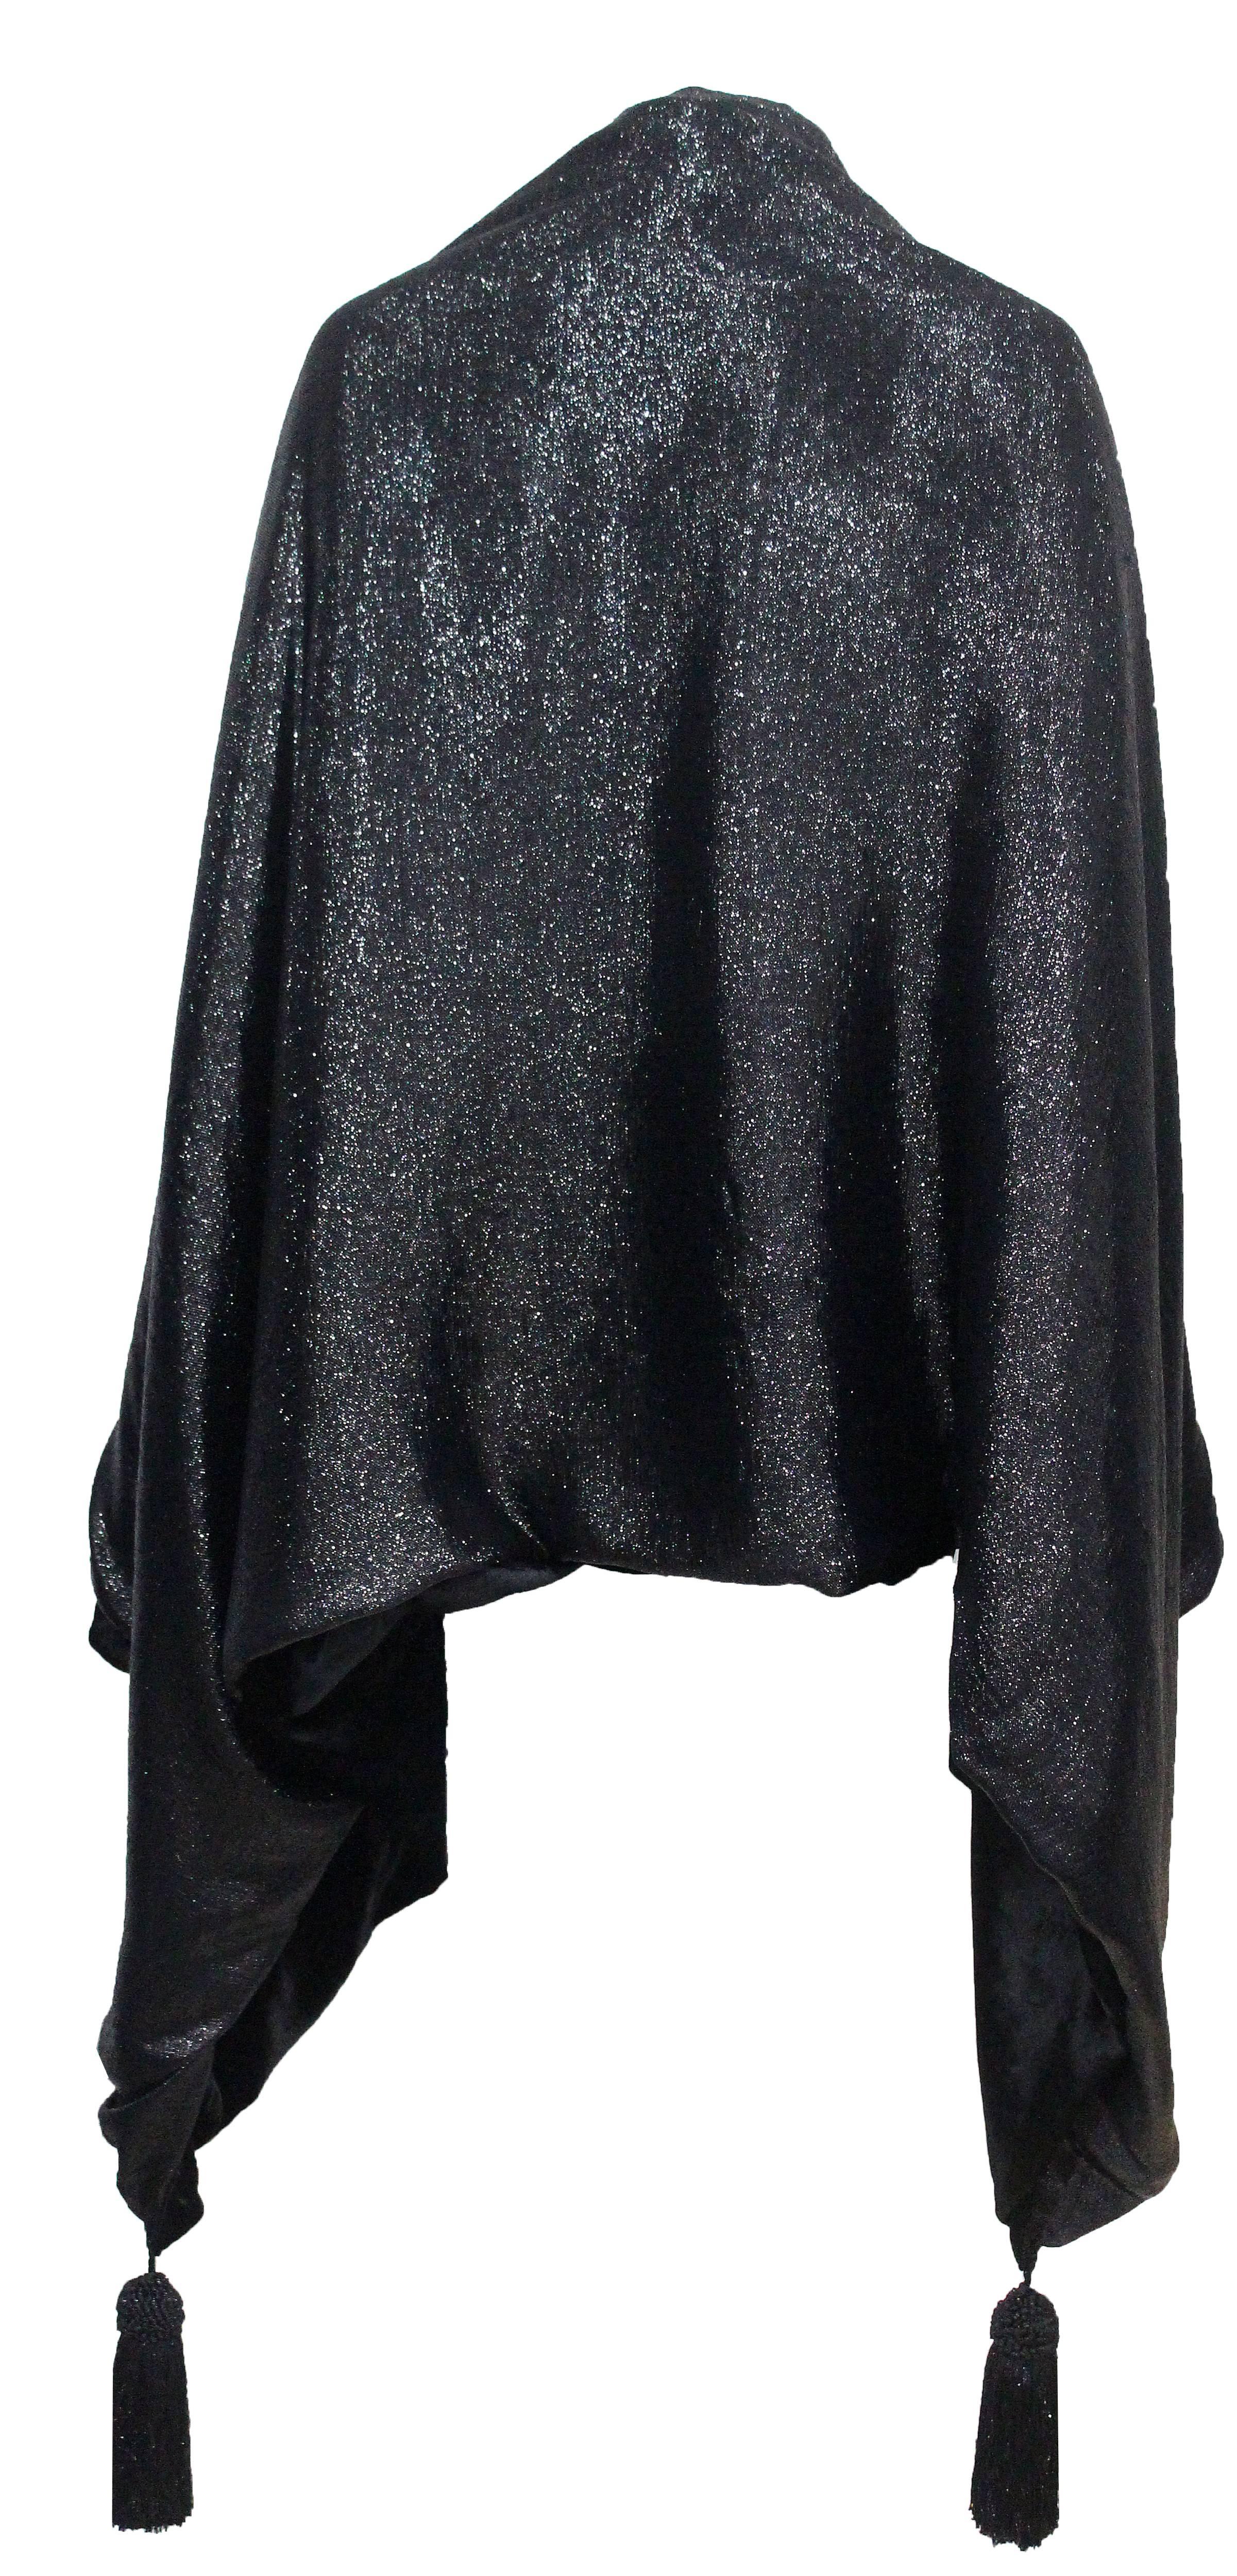 Black 1990s Gianfranco Ferre black velvet and lurex evening large shawl with tassels